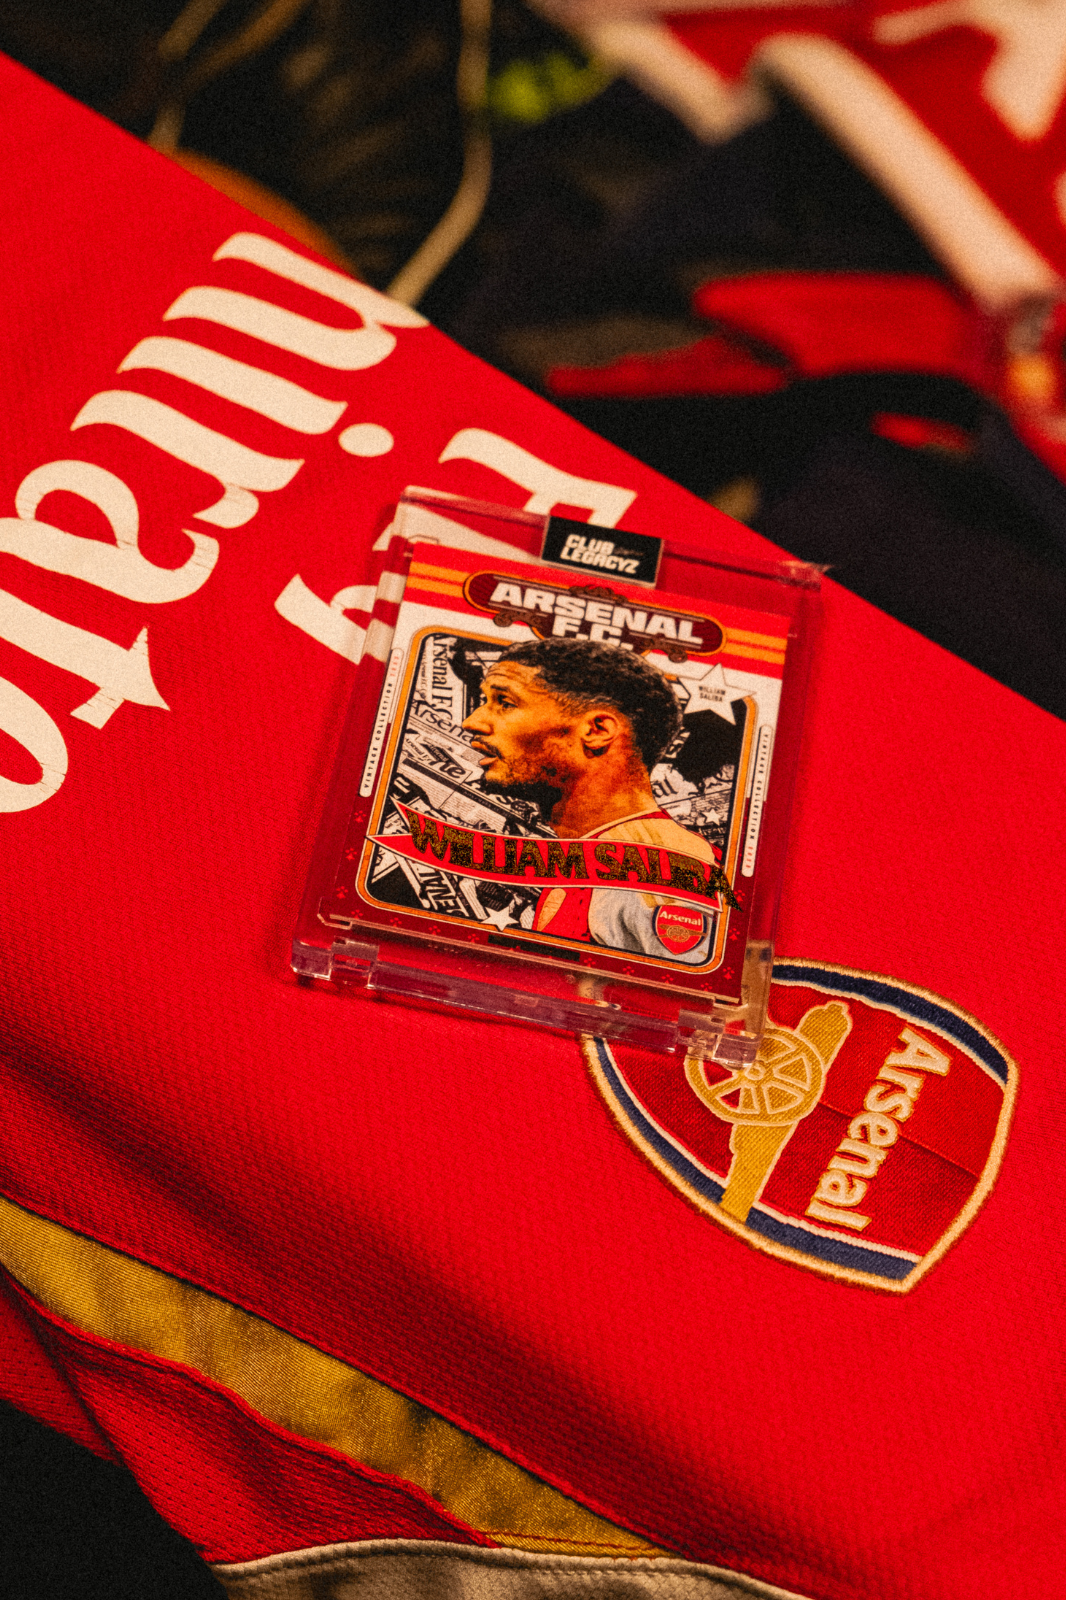 Arsenal FC - Icon Retro William Saliba 100 exemplaires